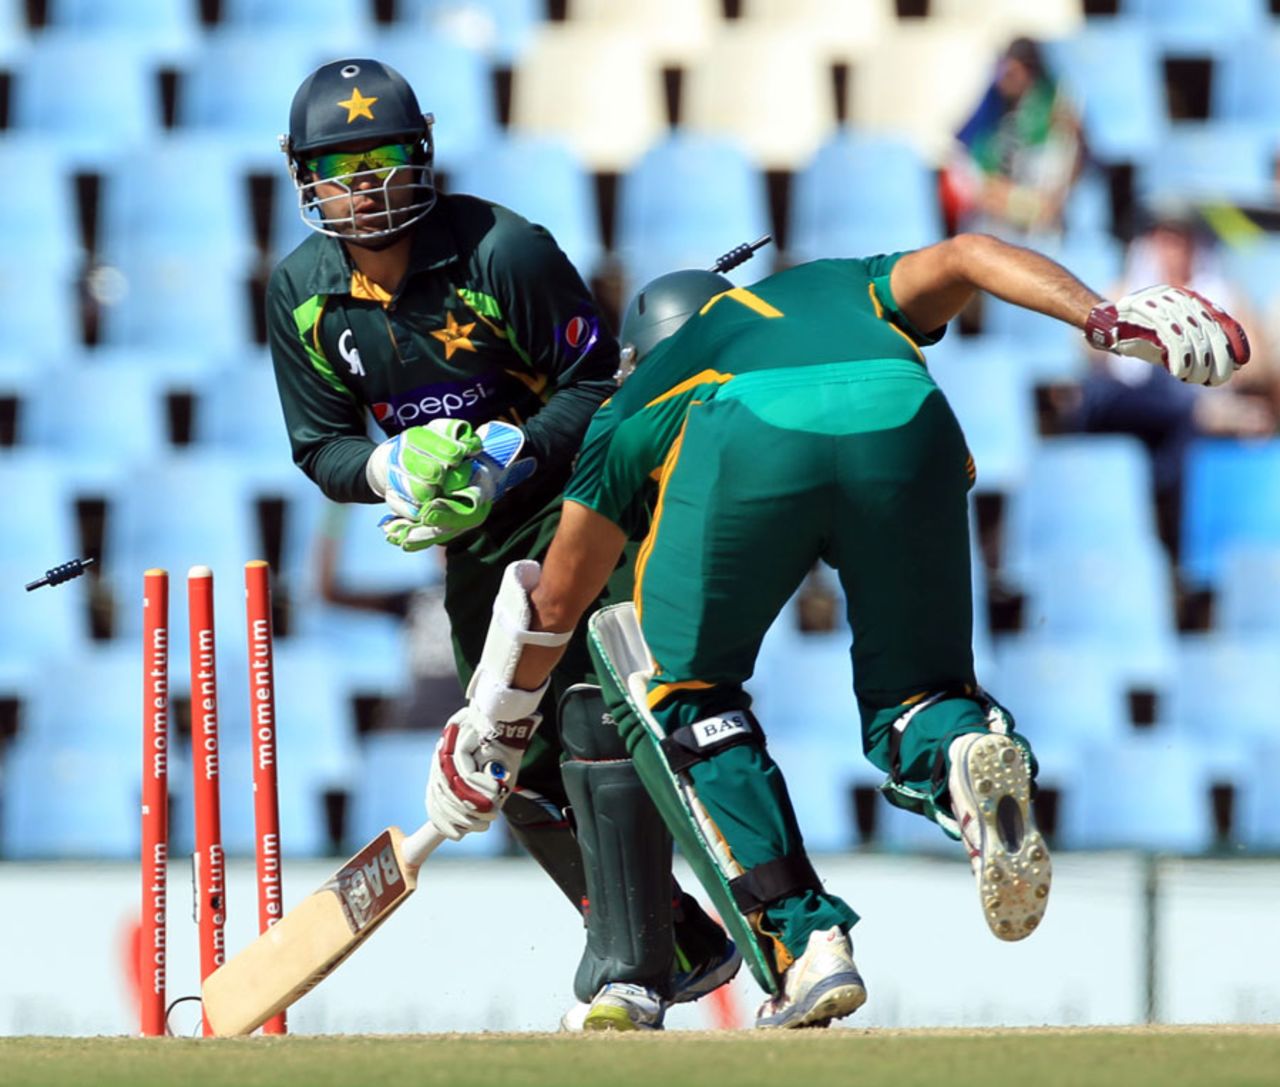 Hashim Amla finds himself just short of his ground, South Africa v Pakistan, 3rd ODI, Centurion, November 30, 2013